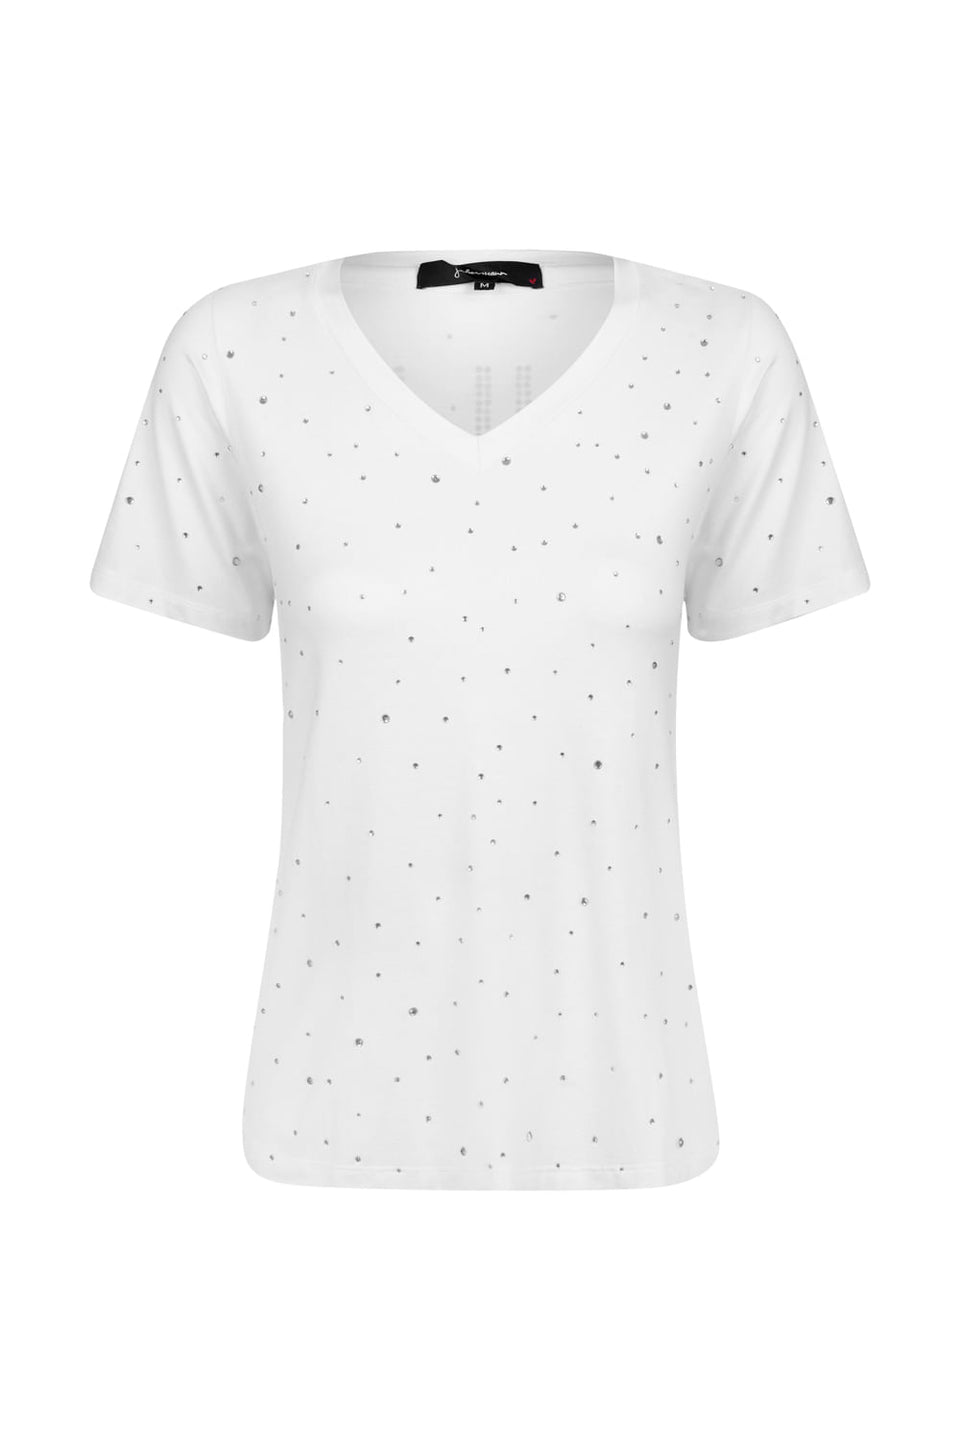 Camiseta Strass 10 Branco - Personalizável